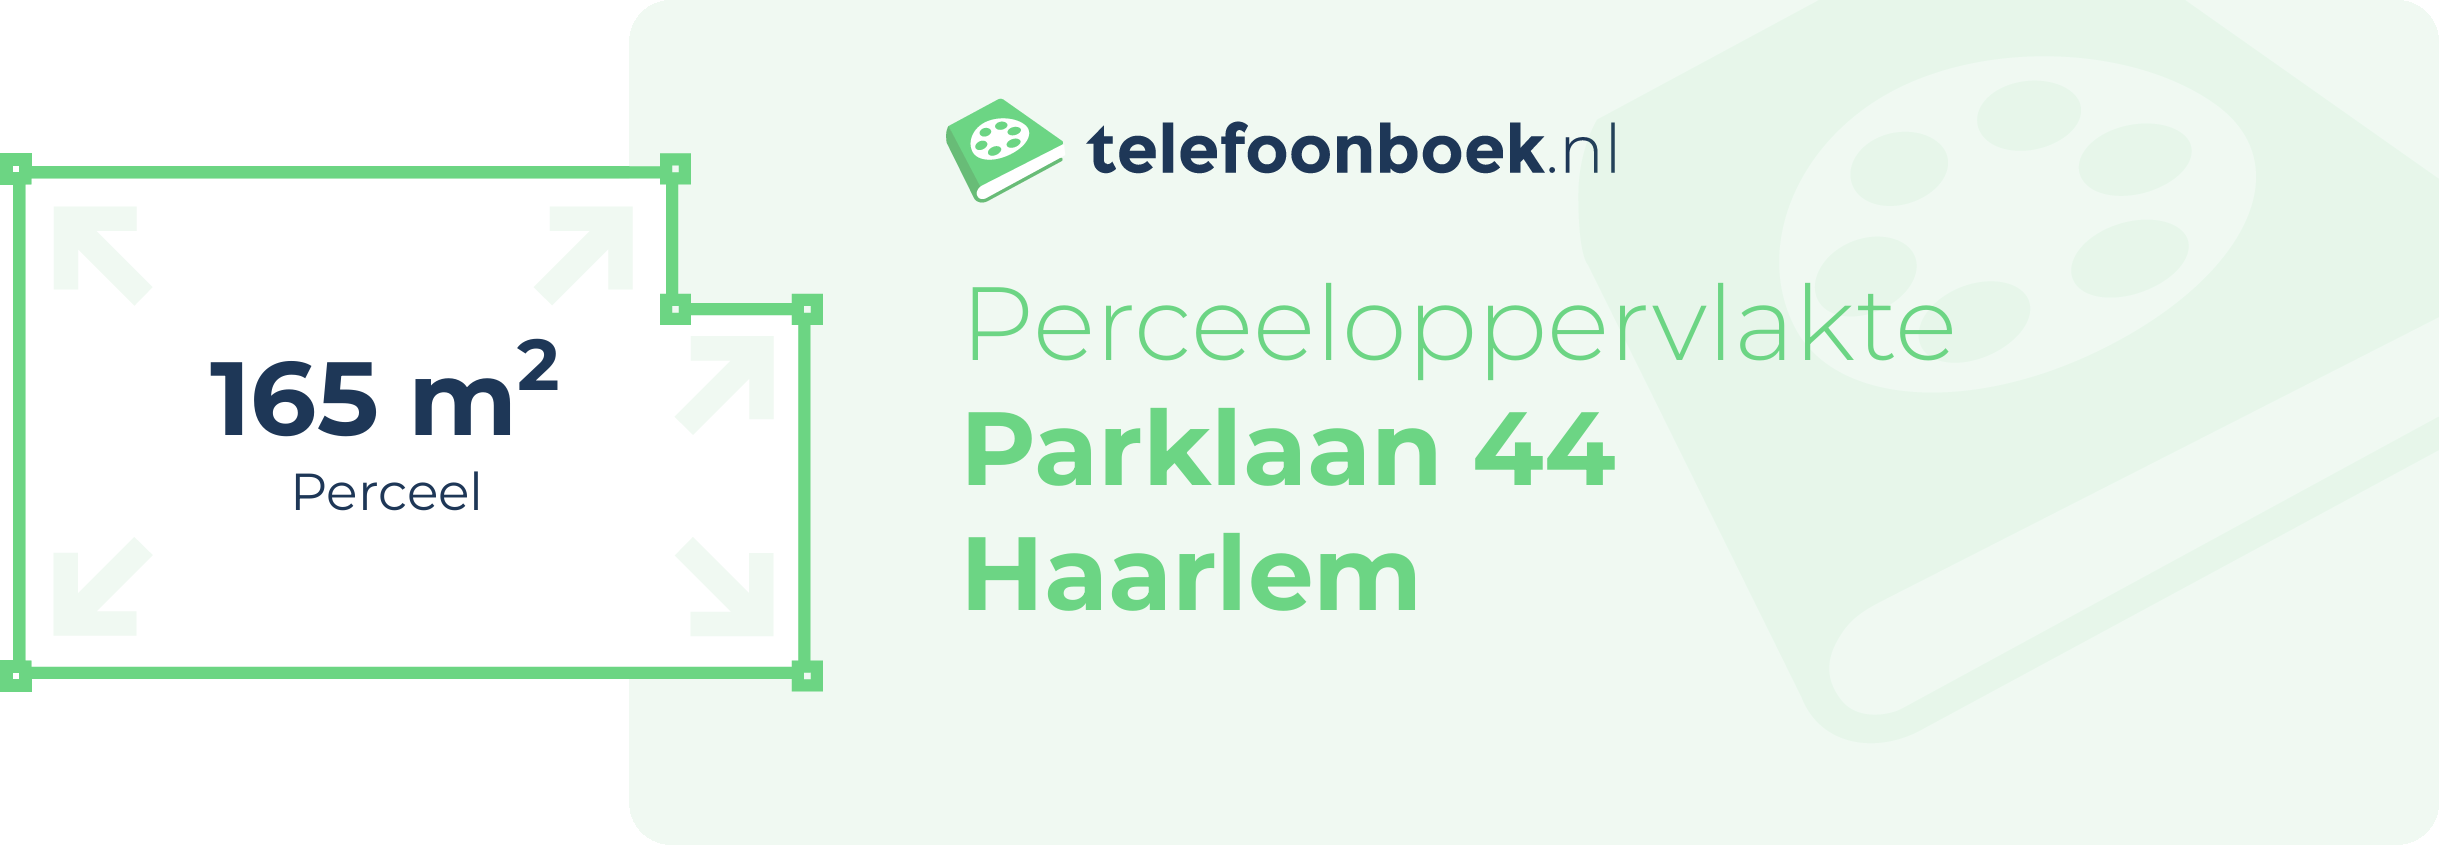 Perceeloppervlakte Parklaan 44 Haarlem